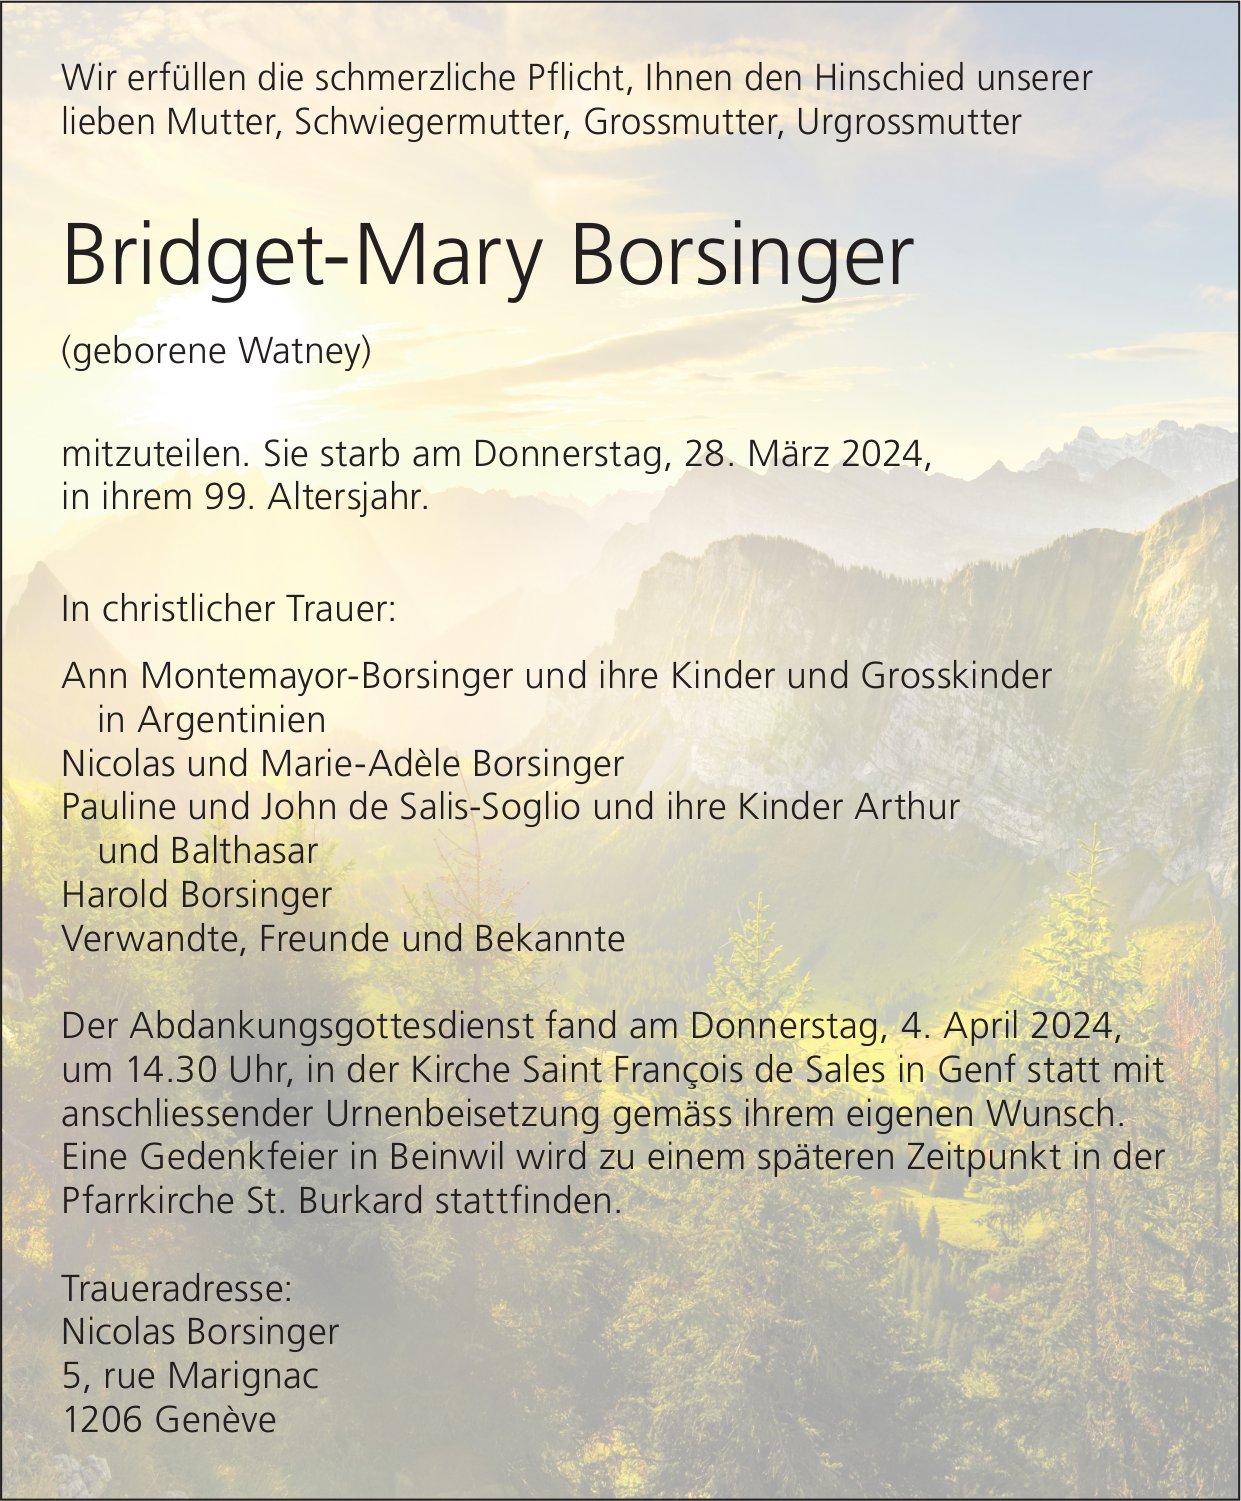 Borsinger Bridget-Mary, März 2024 / TA